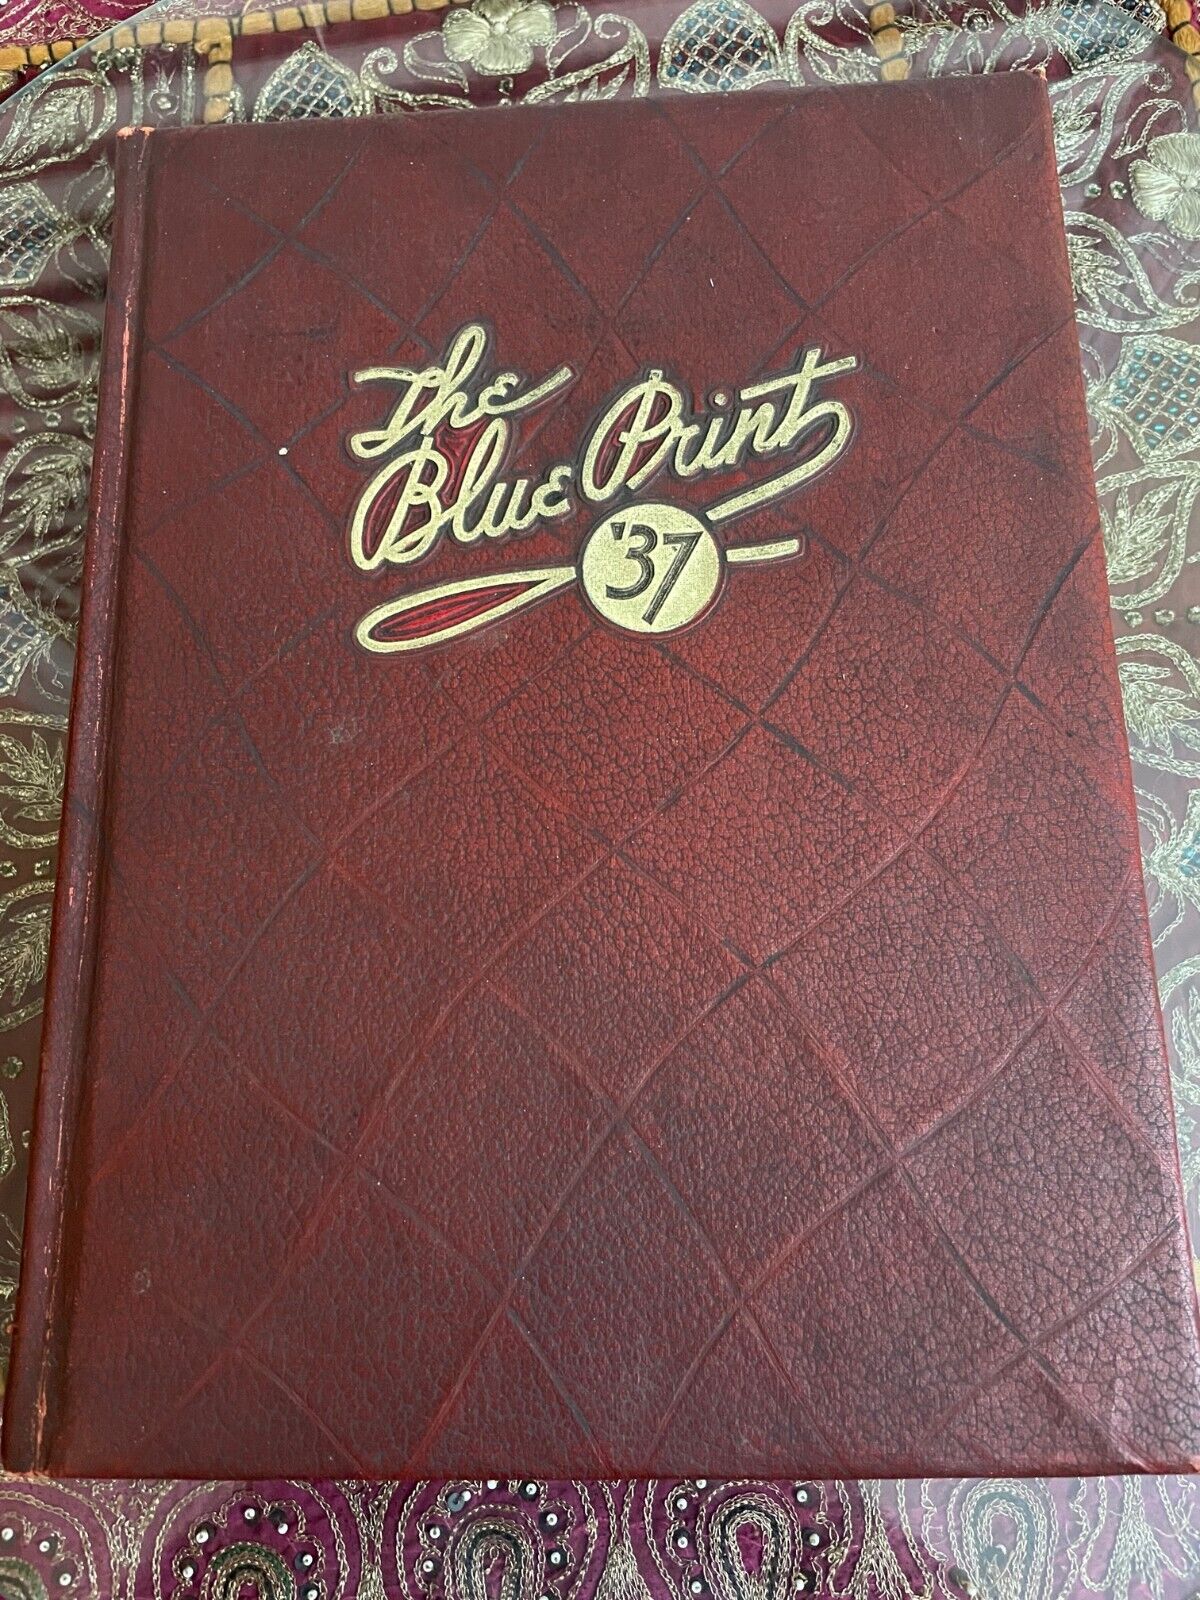 Georgia Tech Blueprint Yearbook 1937 - Excellent condition HC